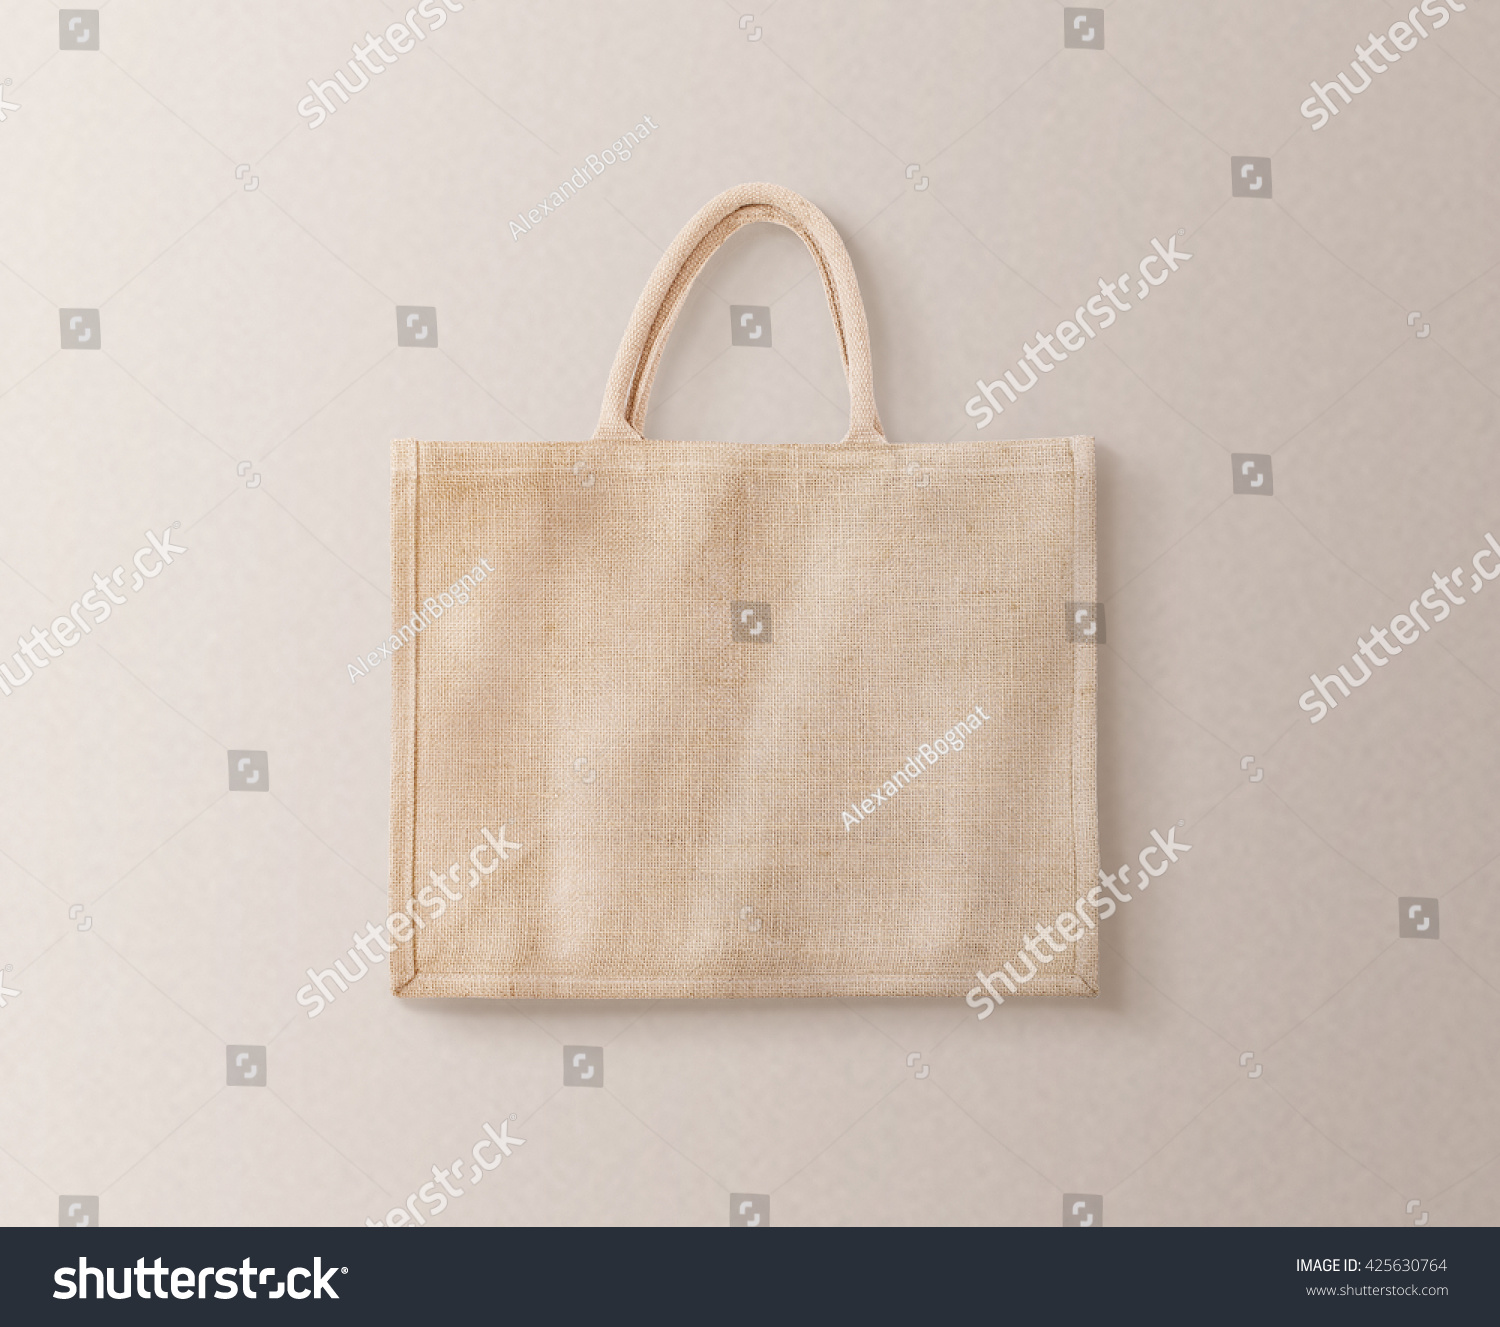 Download Blank Brown Cotton Eco Bag Design Stock Photo 425630764 ...